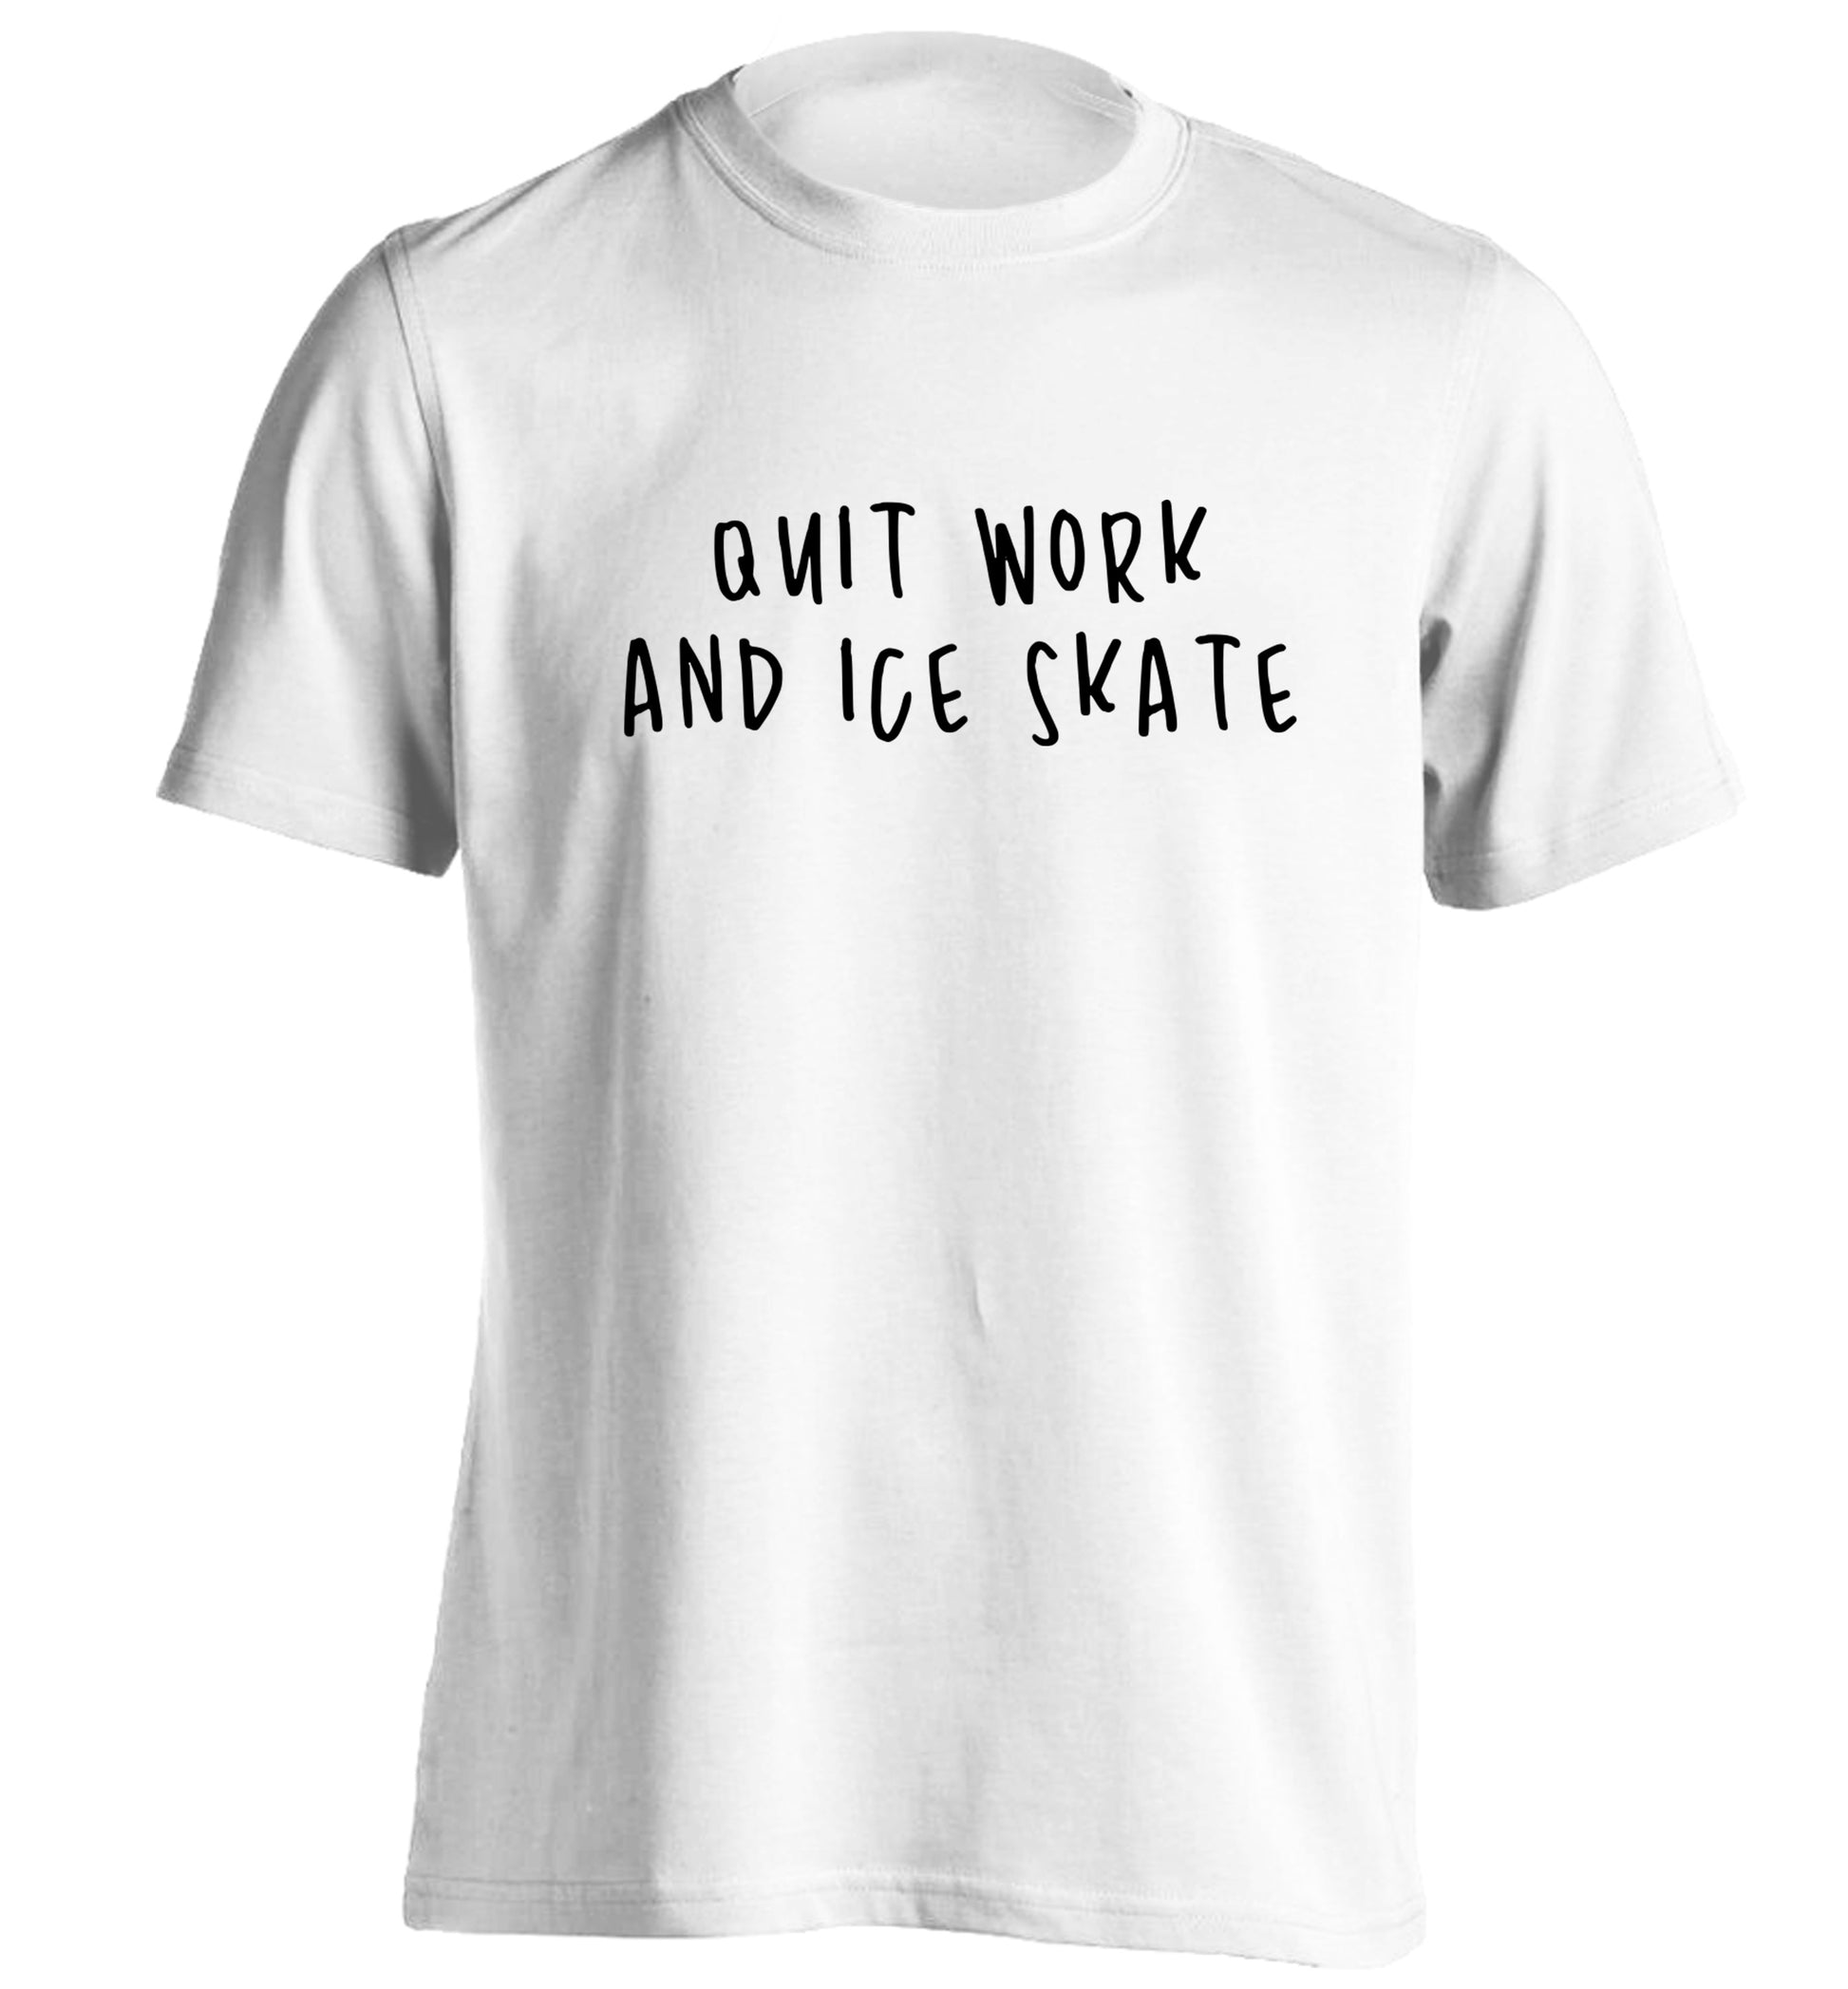 Quit work ice skate adults unisexwhite Tshirt 2XL